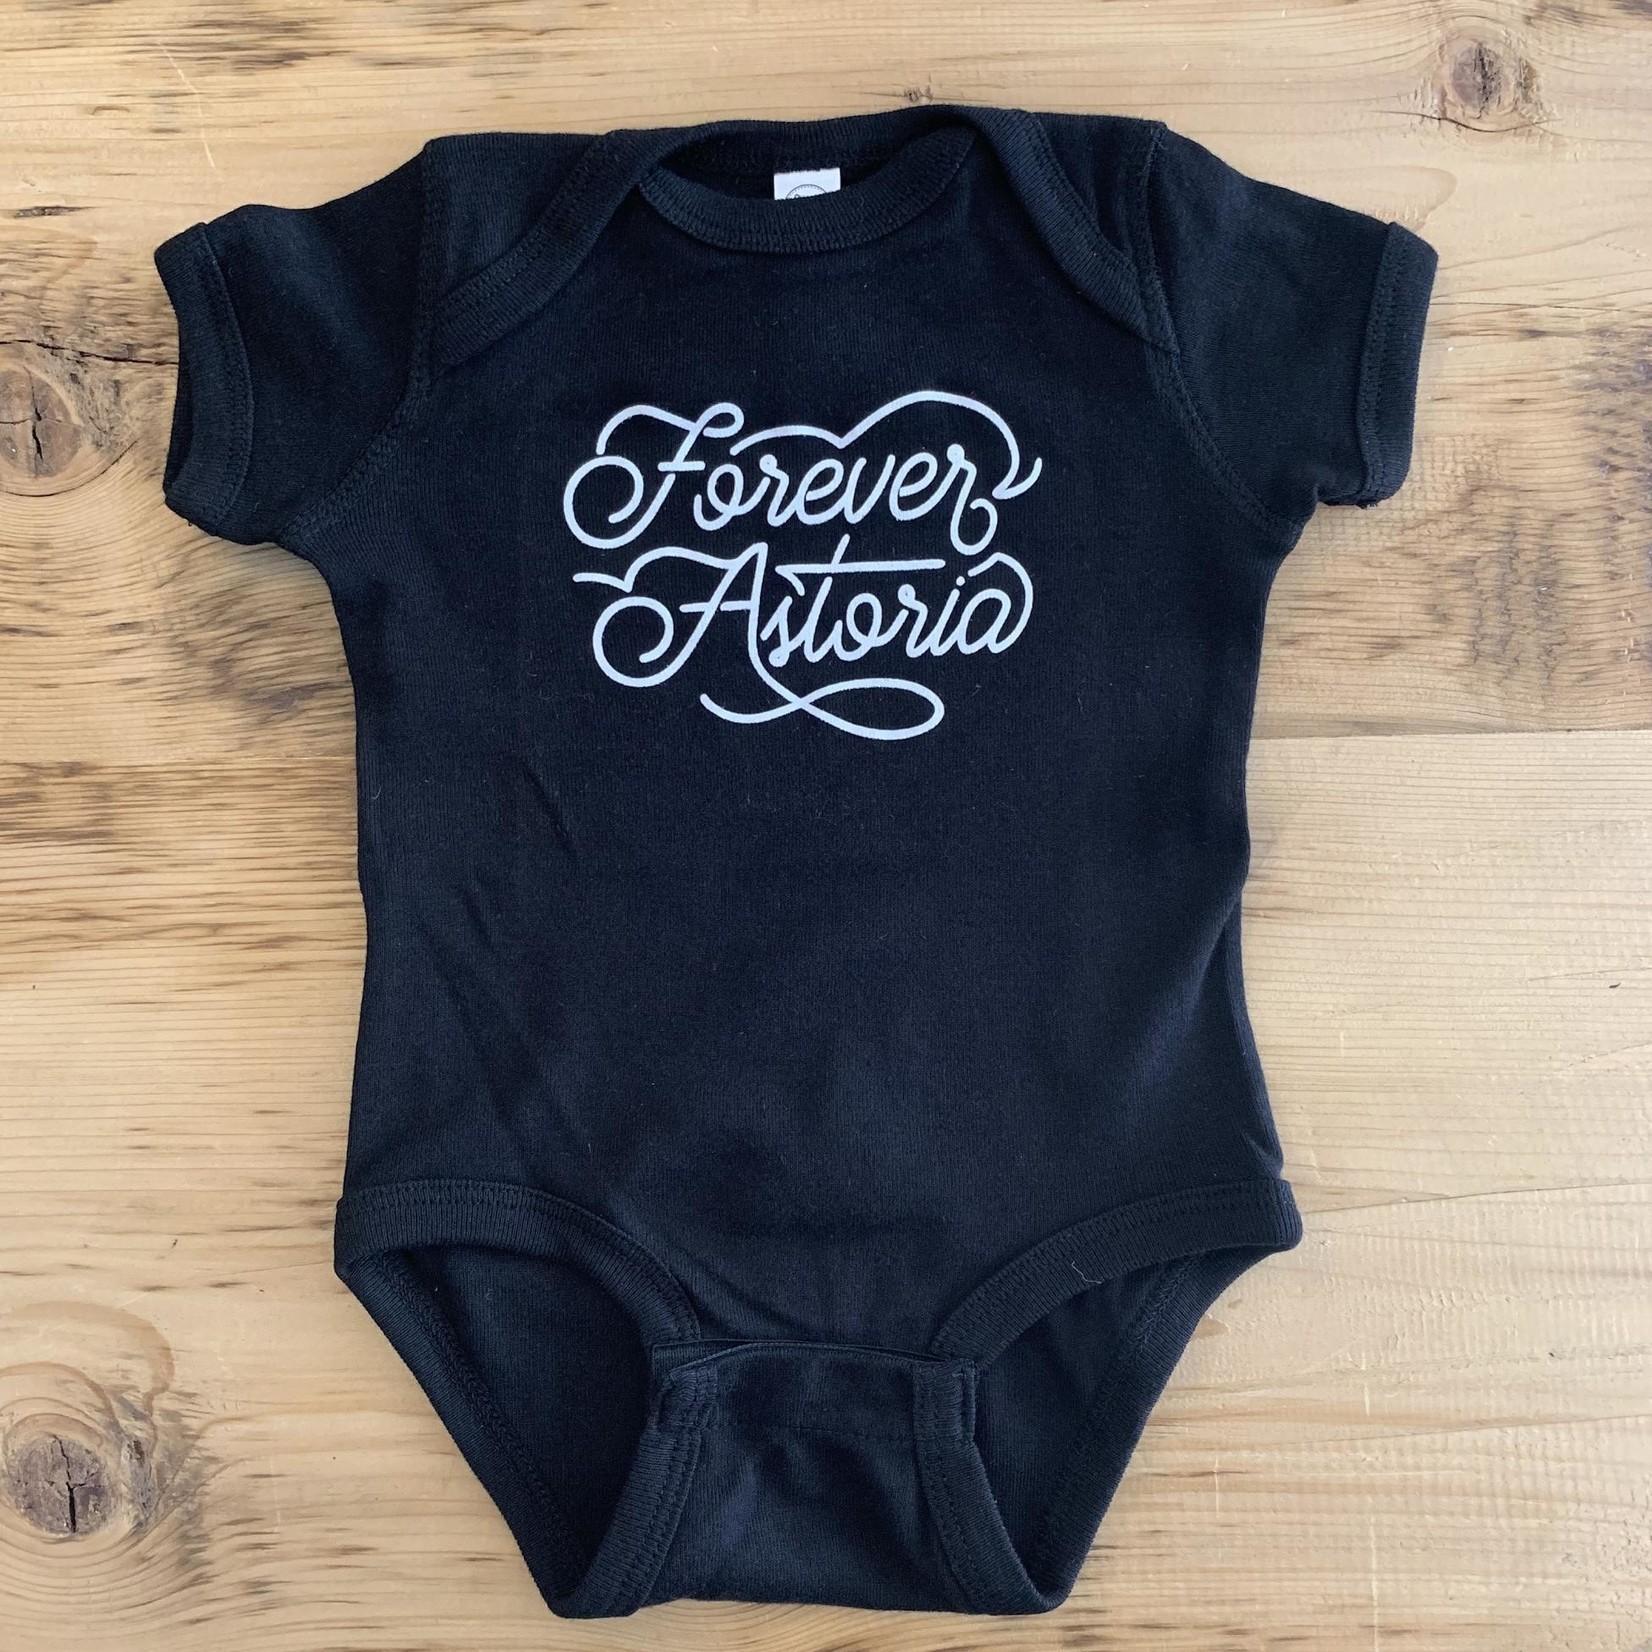 Design Brand Print Baby Forever Astoria - Black